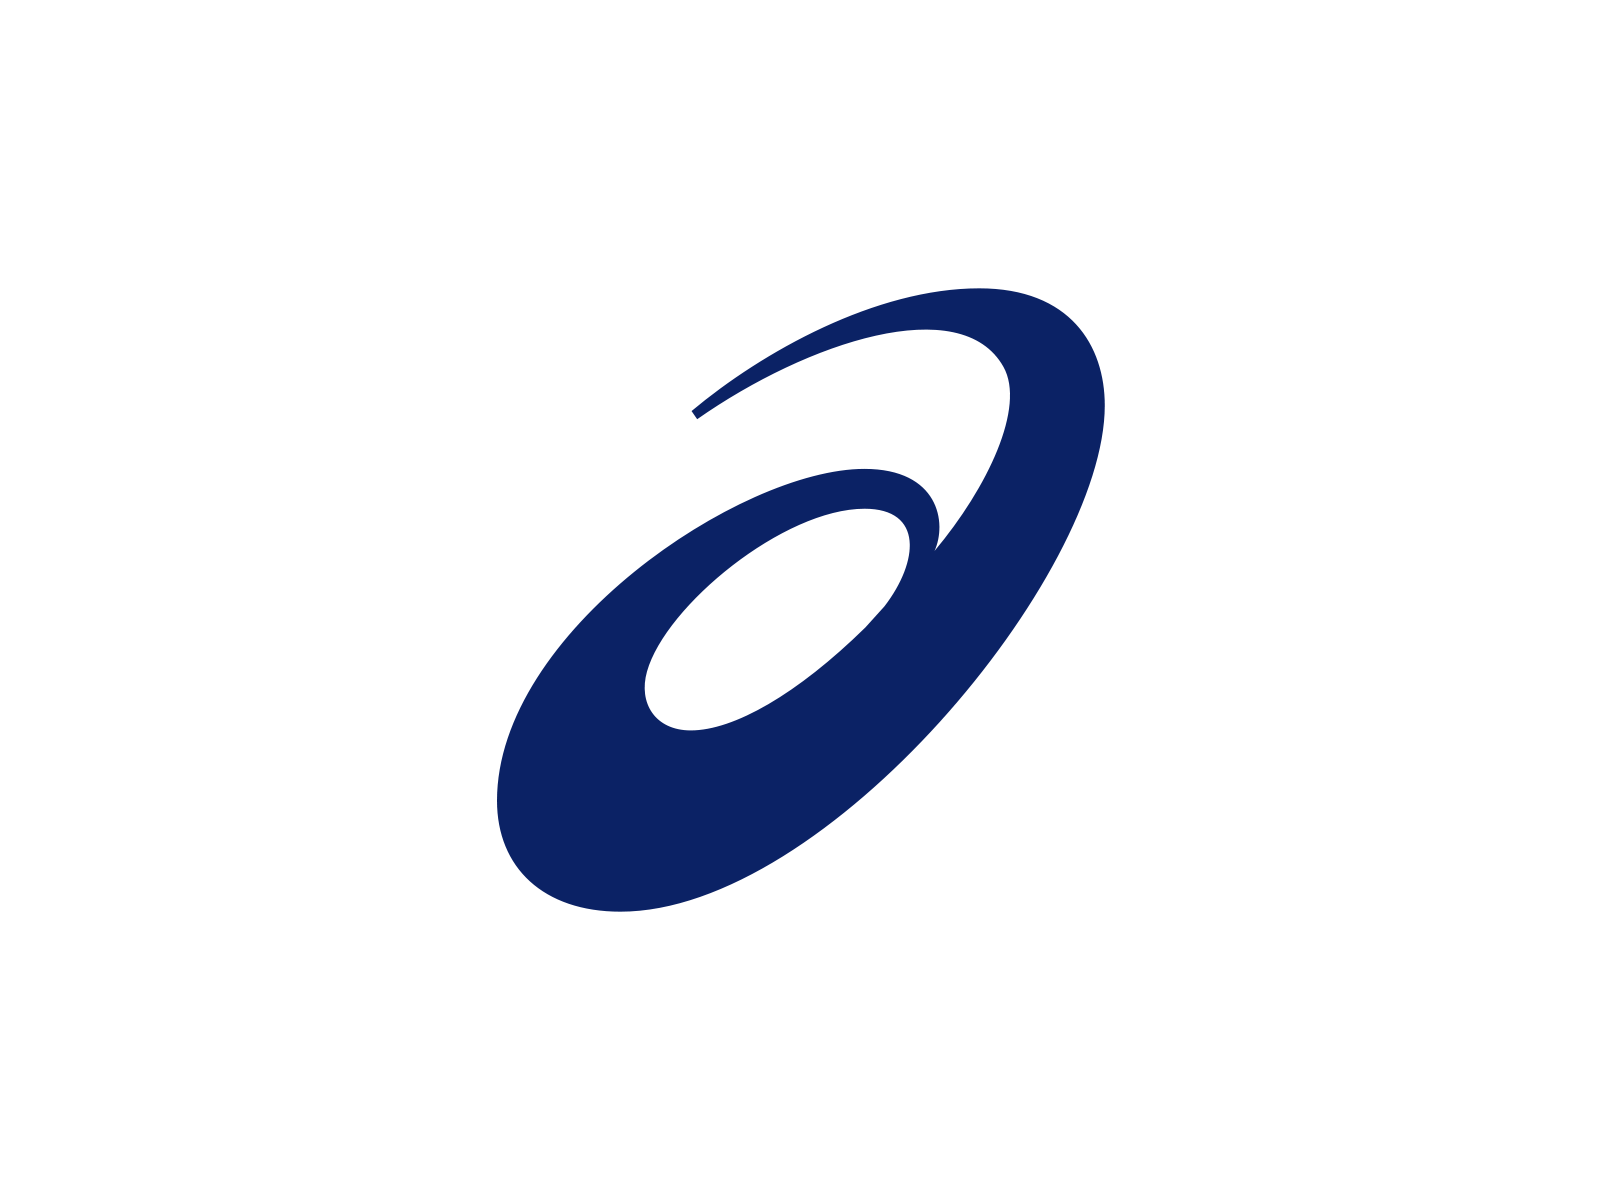 Burberry logo vector - Burber